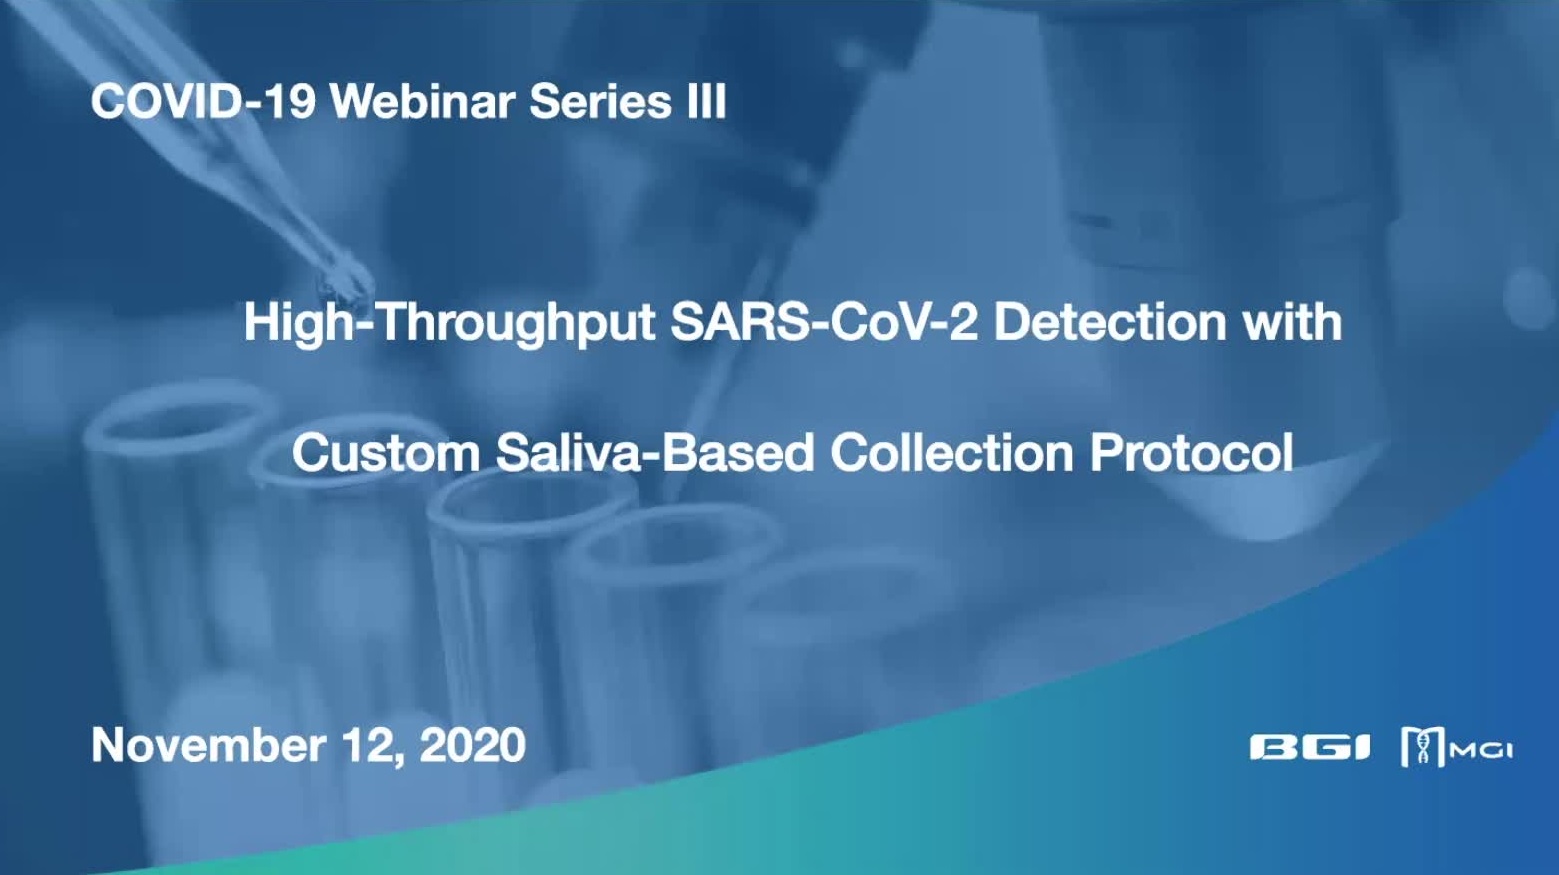 High-Throughput SARS-CoV-2 Detection with Custom Saliva-Based Collection Protocol Description